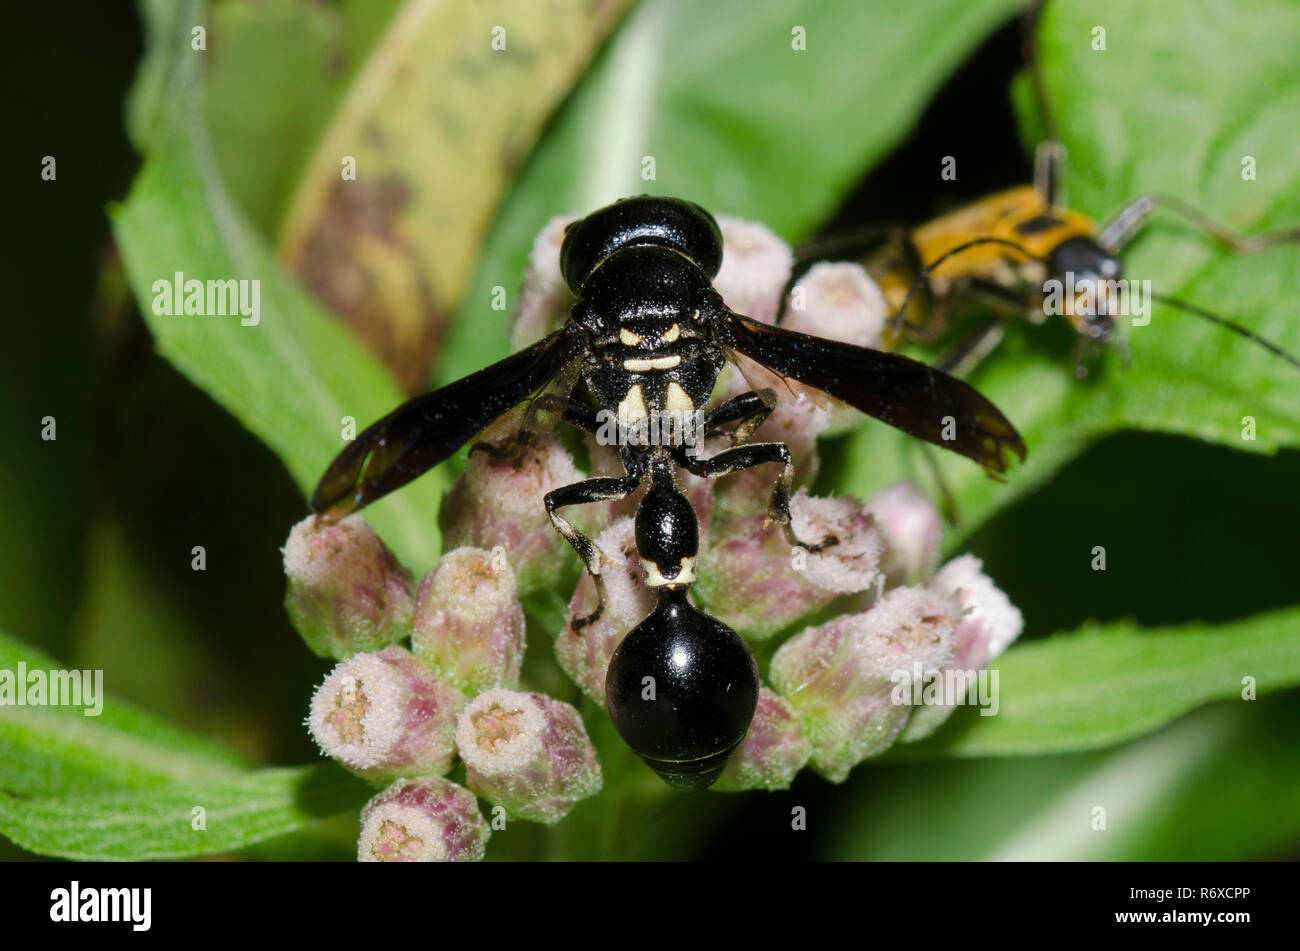 Potter Wasp, Zethus spinipes, on Saltmarsh Fleabane, Pluchea odorata Stock Photo